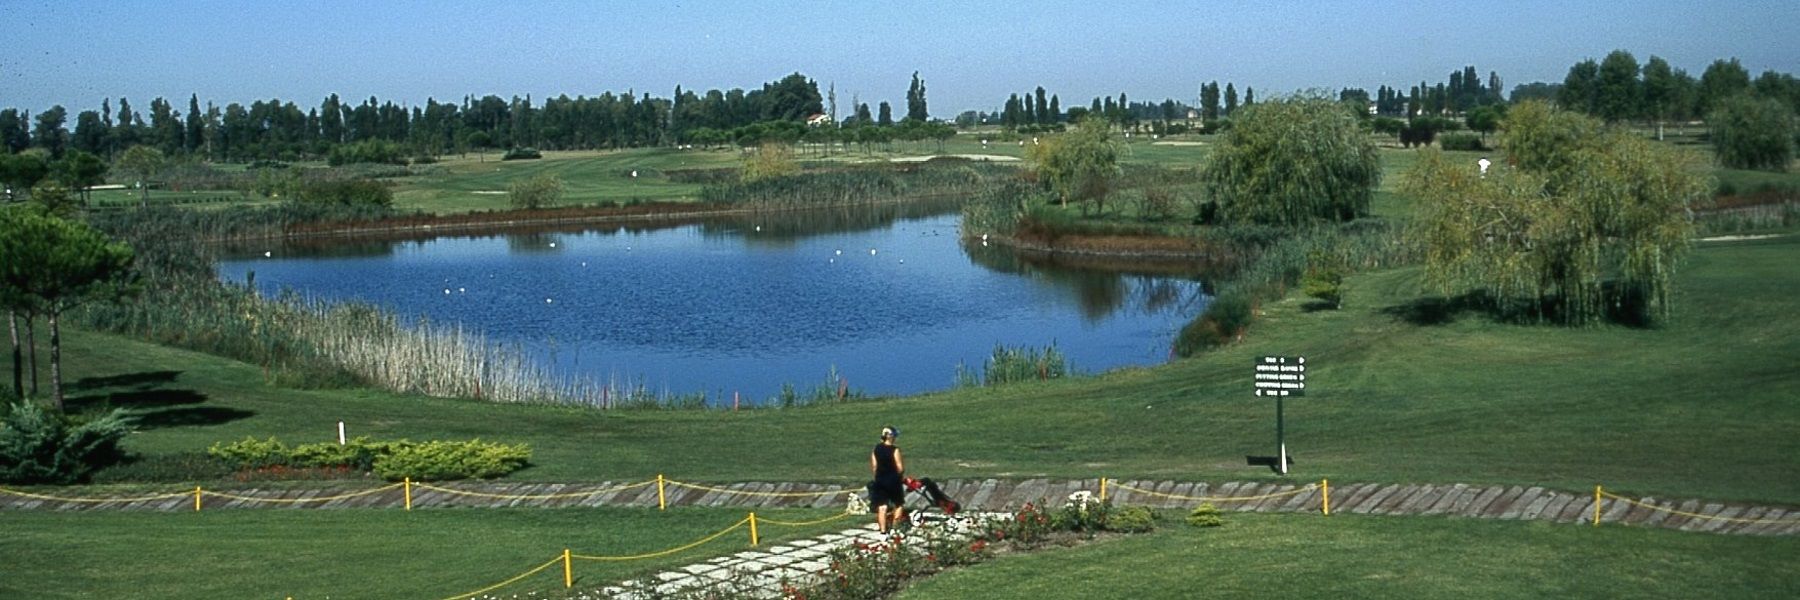 Adriatic Golf Club Cervia - Gli appuntamenti di settembre